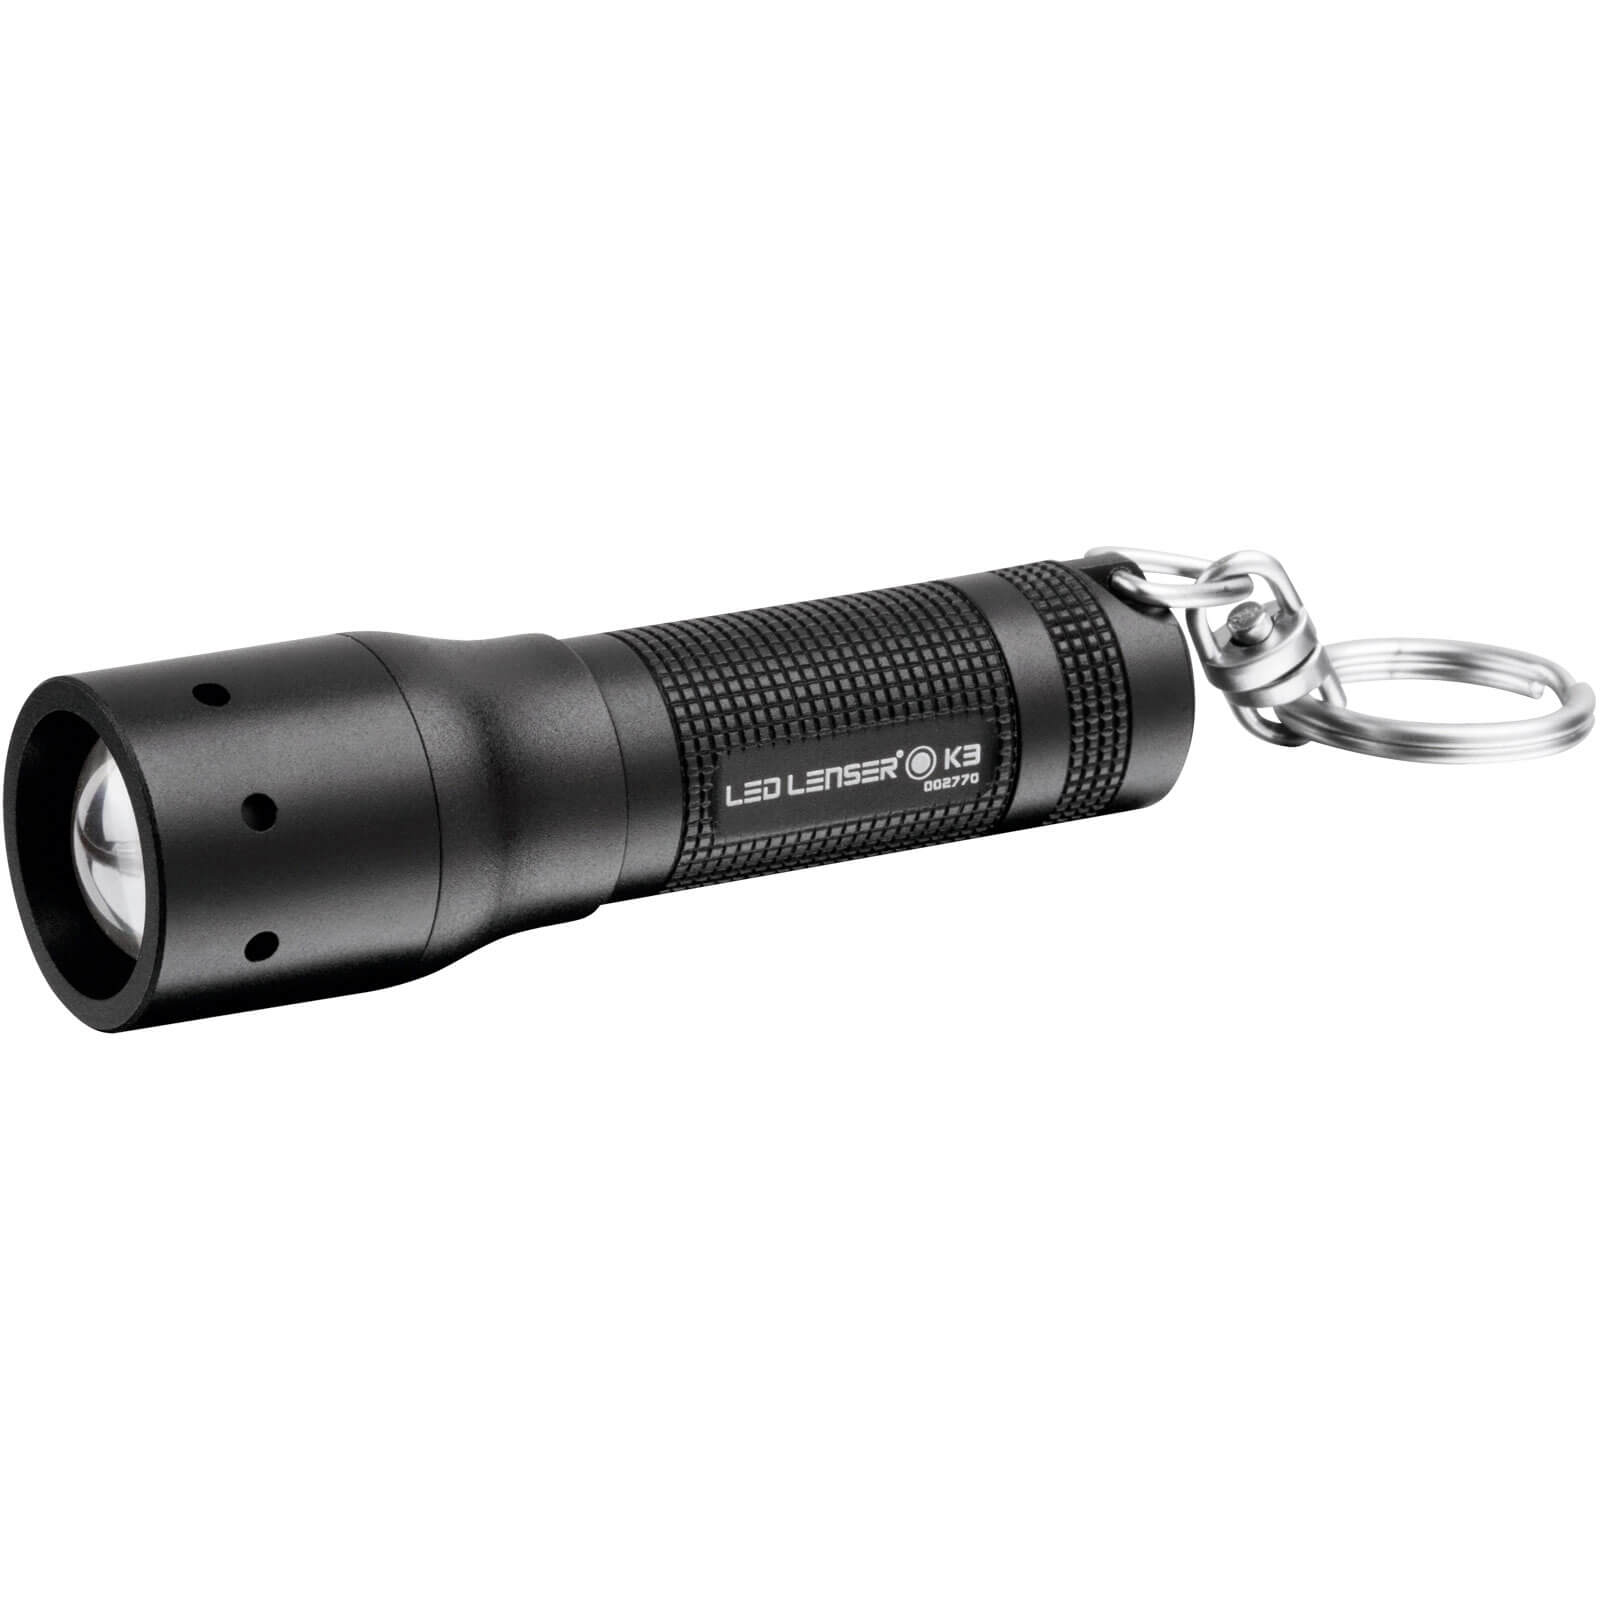 LED Lenser K3 Professional Focusing Micro Keyring Torch Black in Gift Box 15 Lumens Size 4 x AG13 Ba